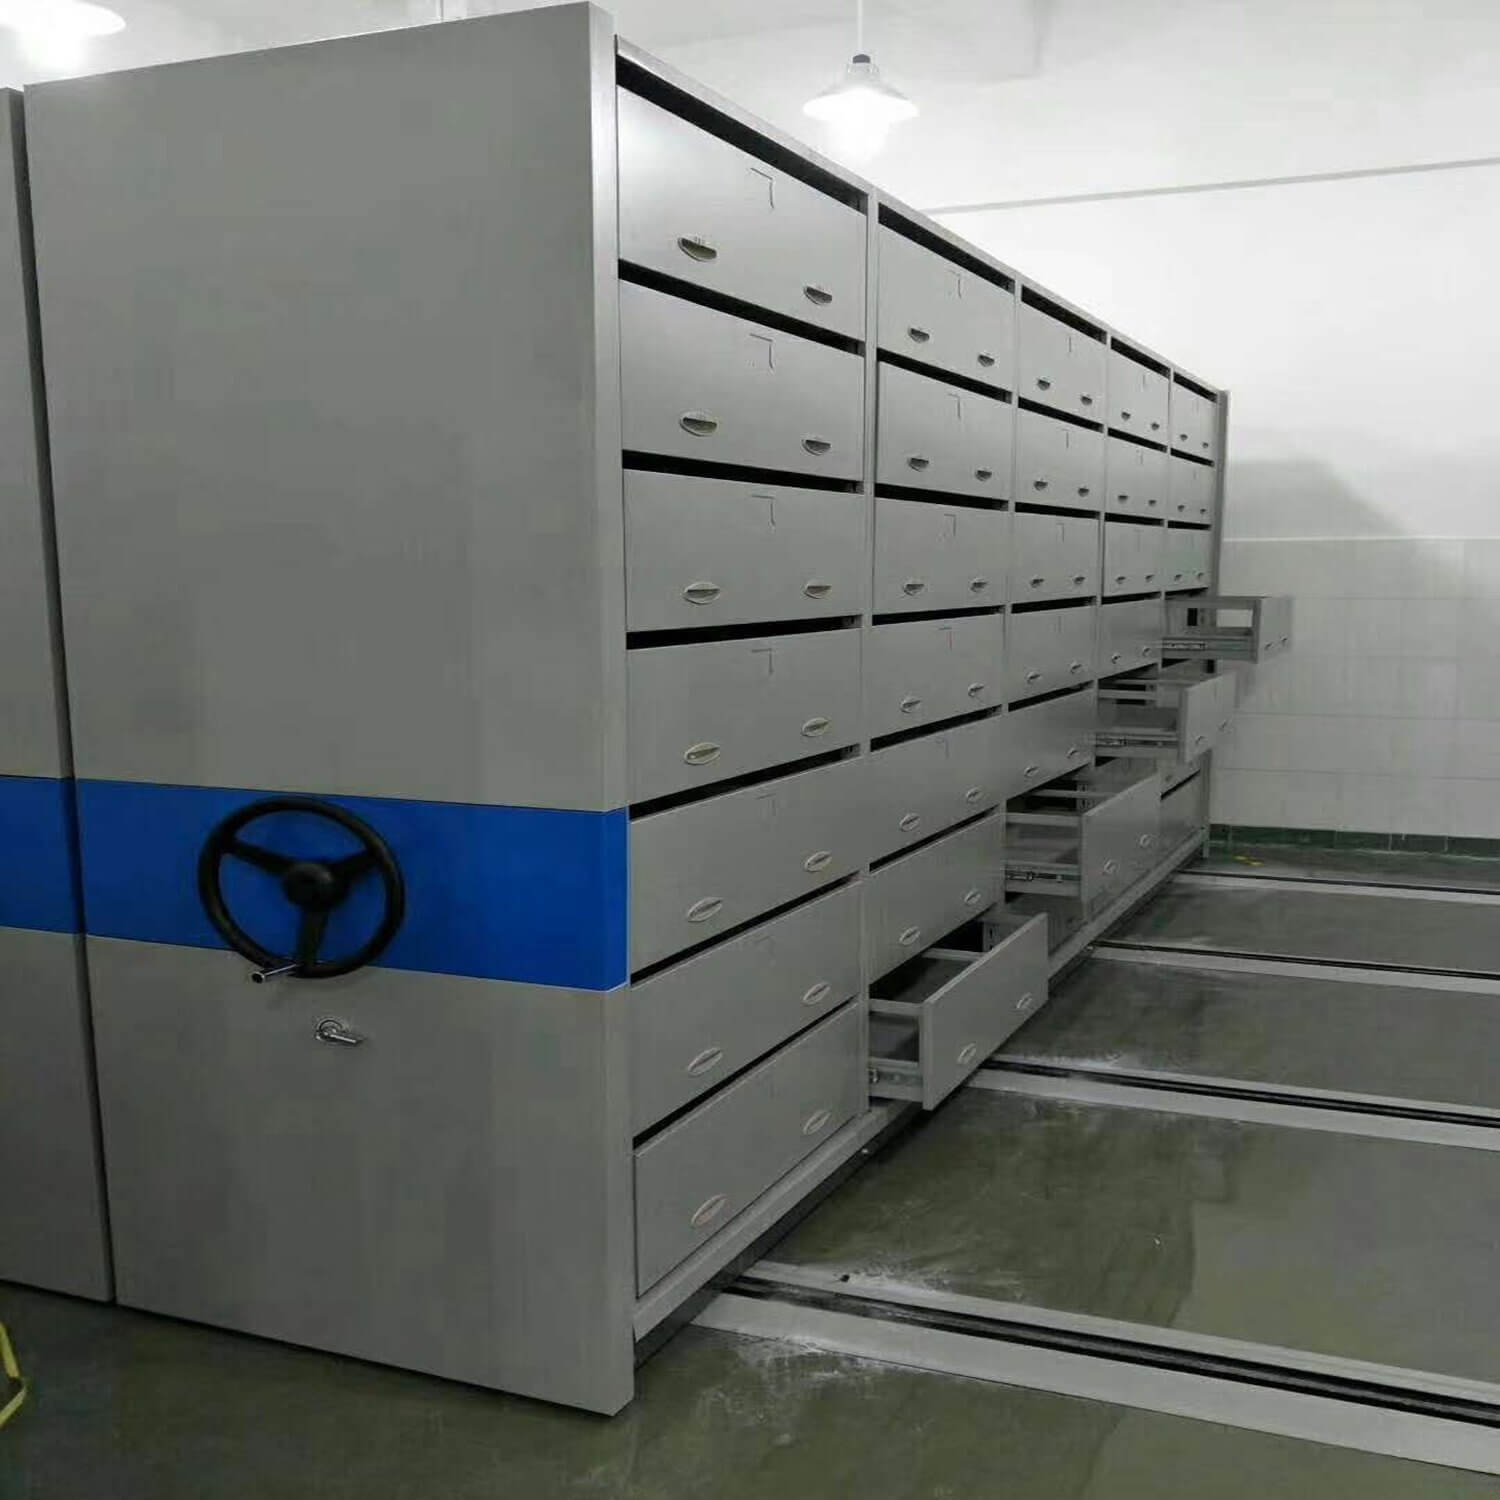 Mobile Compactor Storage System Suppliers In Noida, Delhi